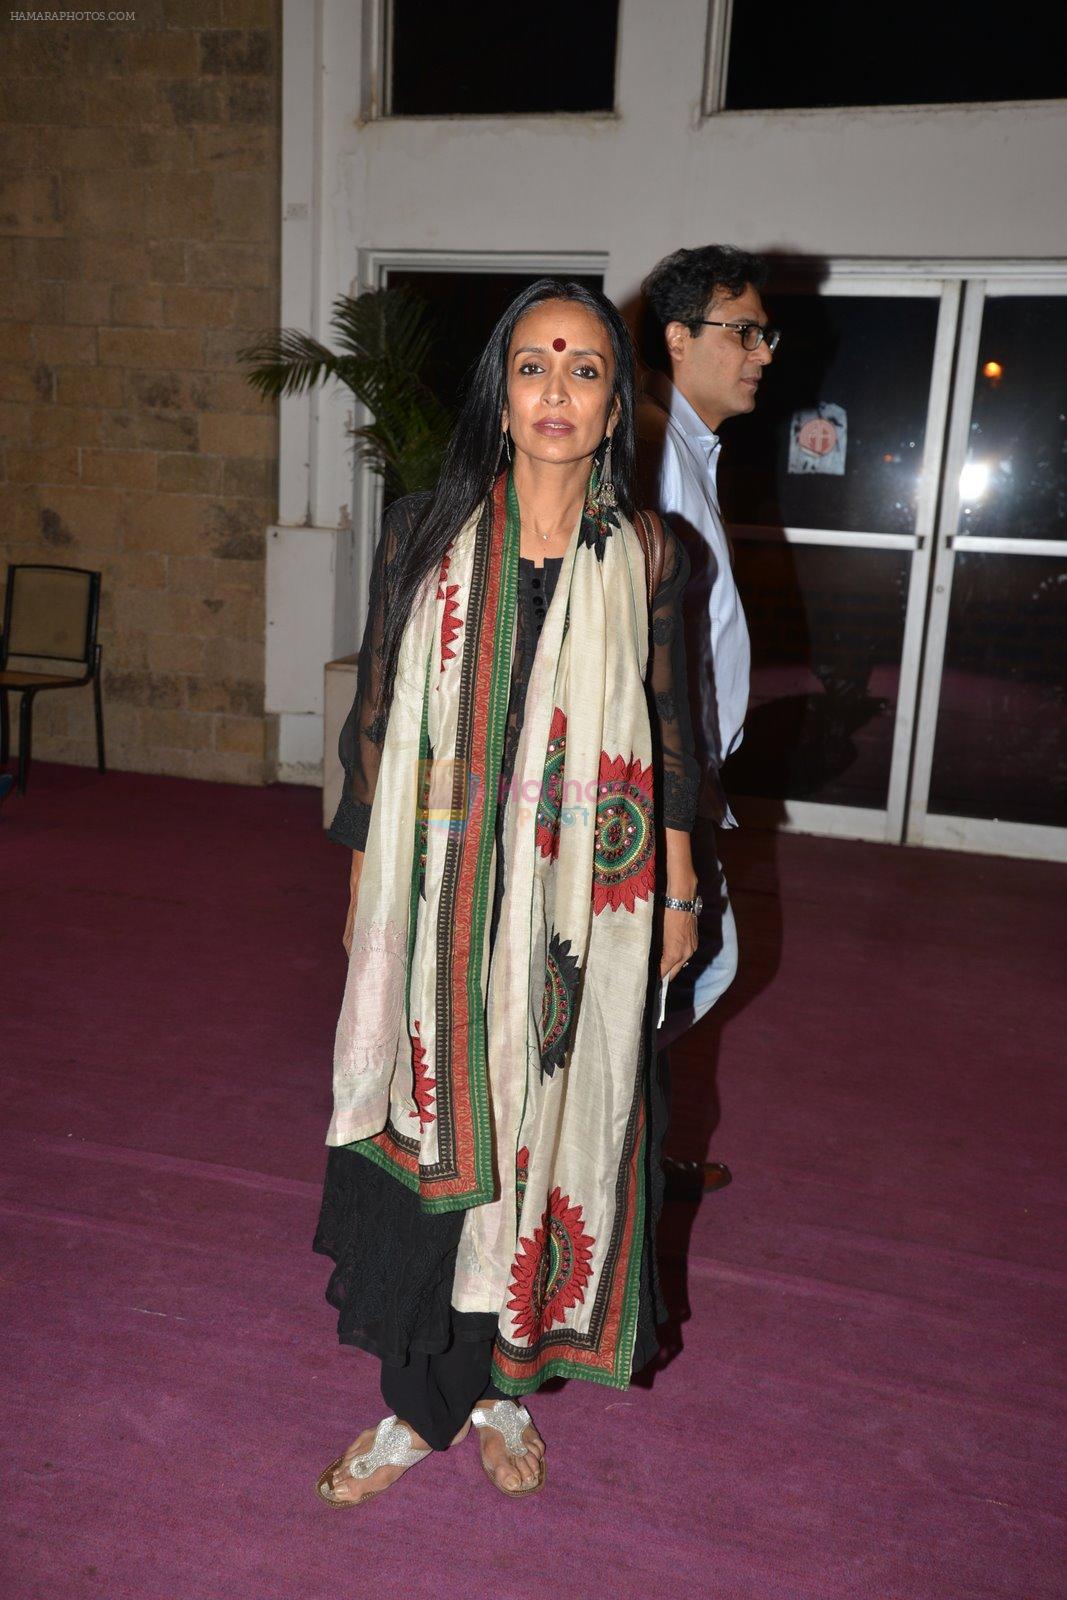 Suchitra Pillai attends Ashvin Gidwani's Nicolai show in NCPA, Mumbai on 14th Feb 2015